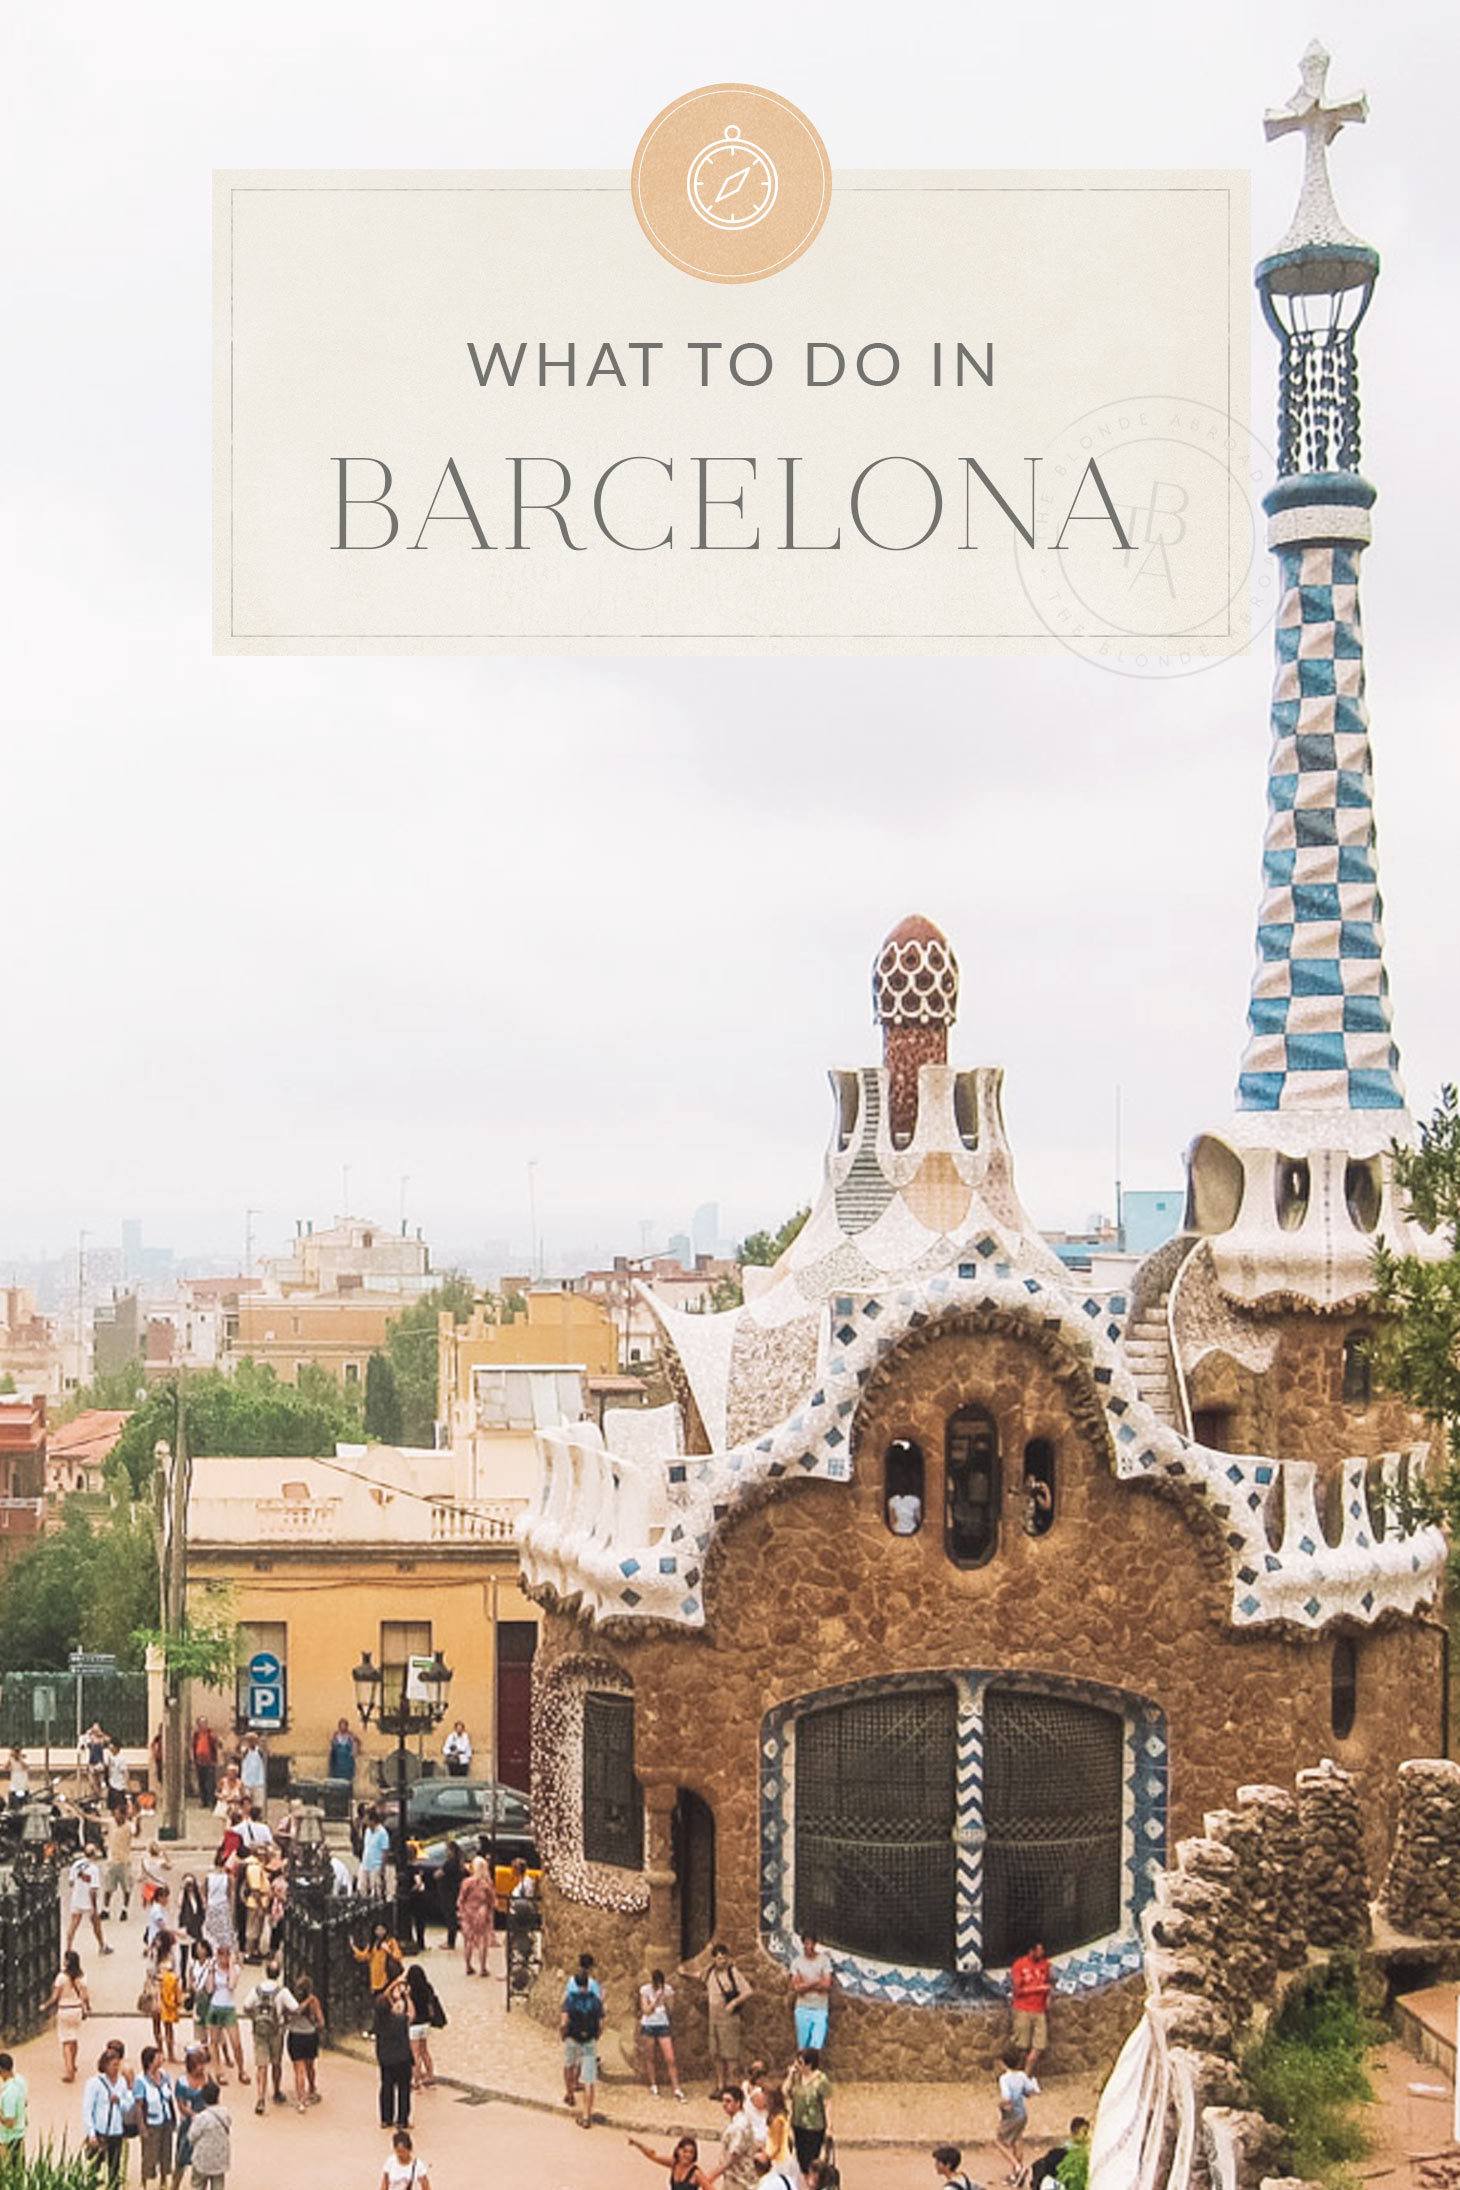 local barcelona travel tips